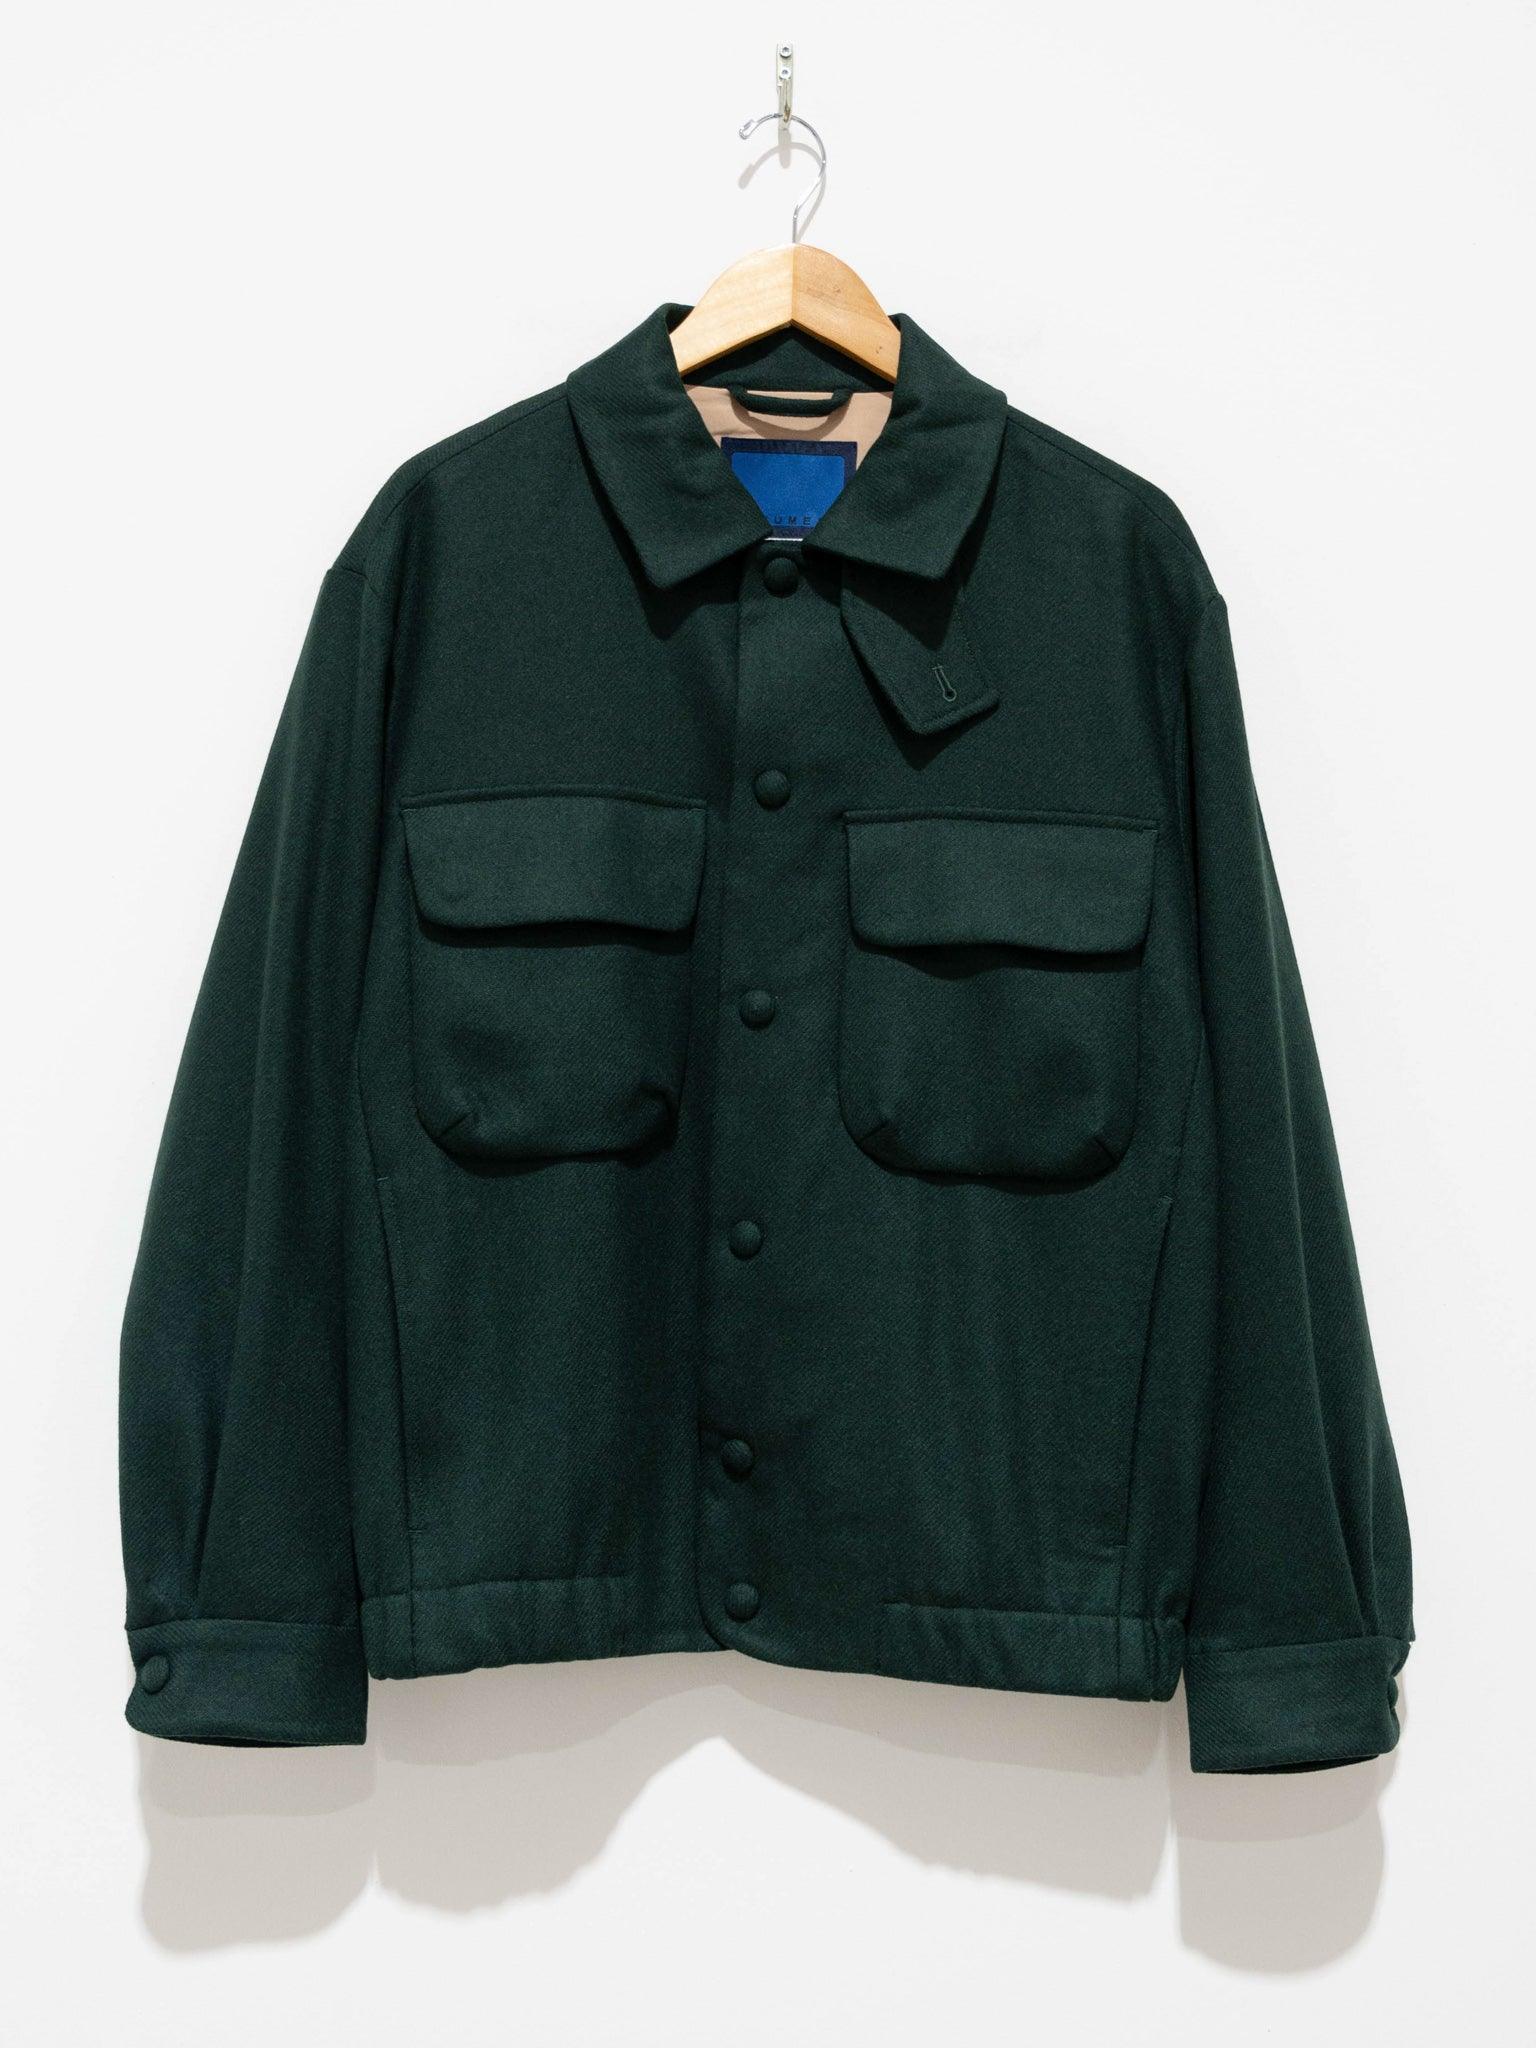 Namu Shop - Document English Wool CPO Jacket - Forest Green (restocked)